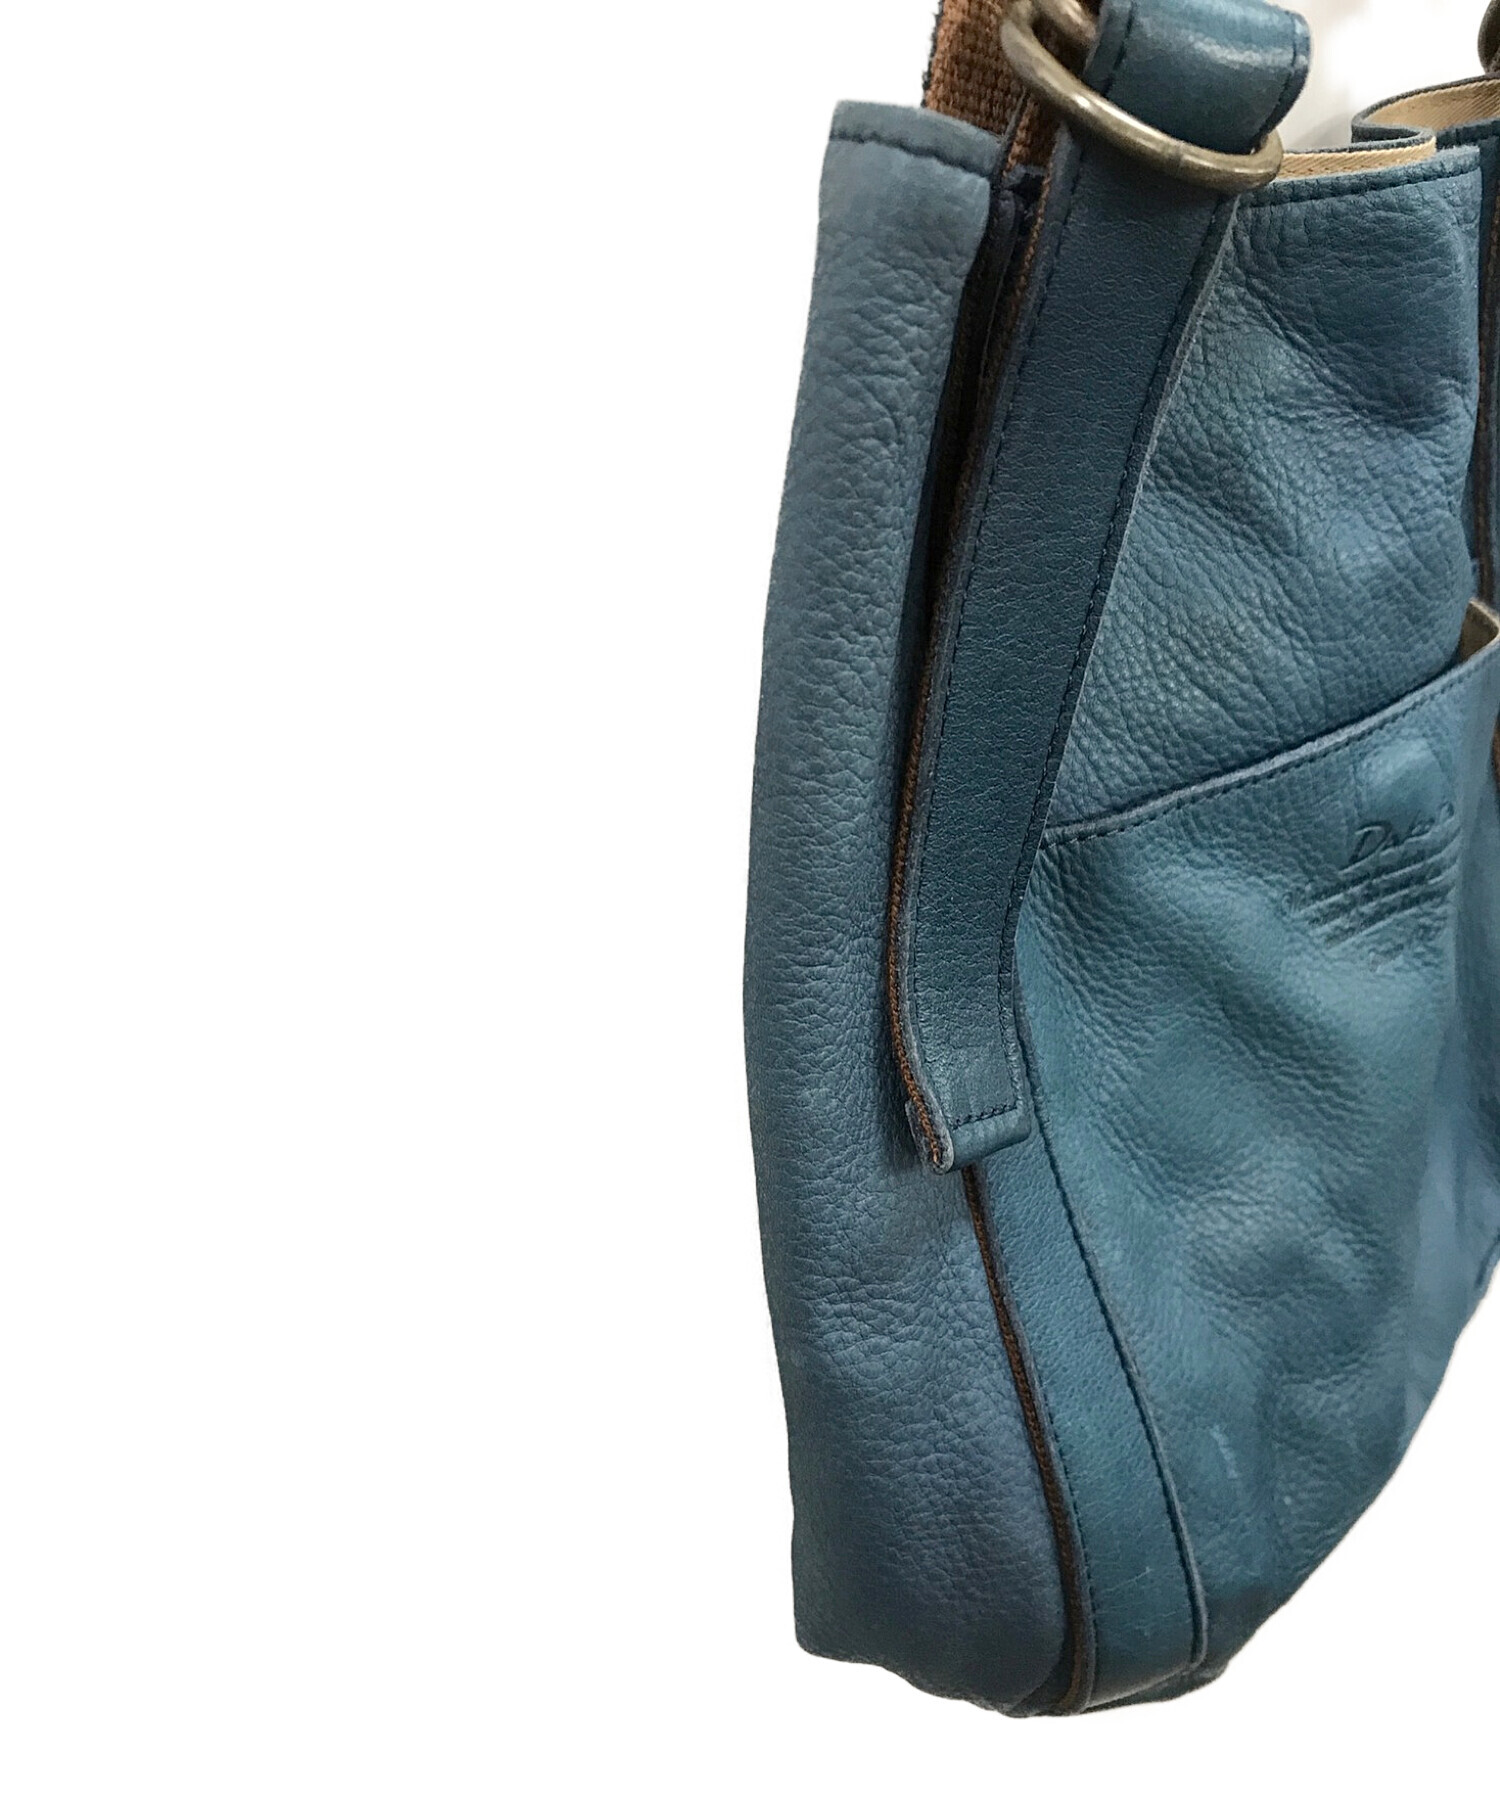 DAKOTA (ダコタ) レザートートバッグ ブルー サイズ:実寸サイズにてご確認ください。